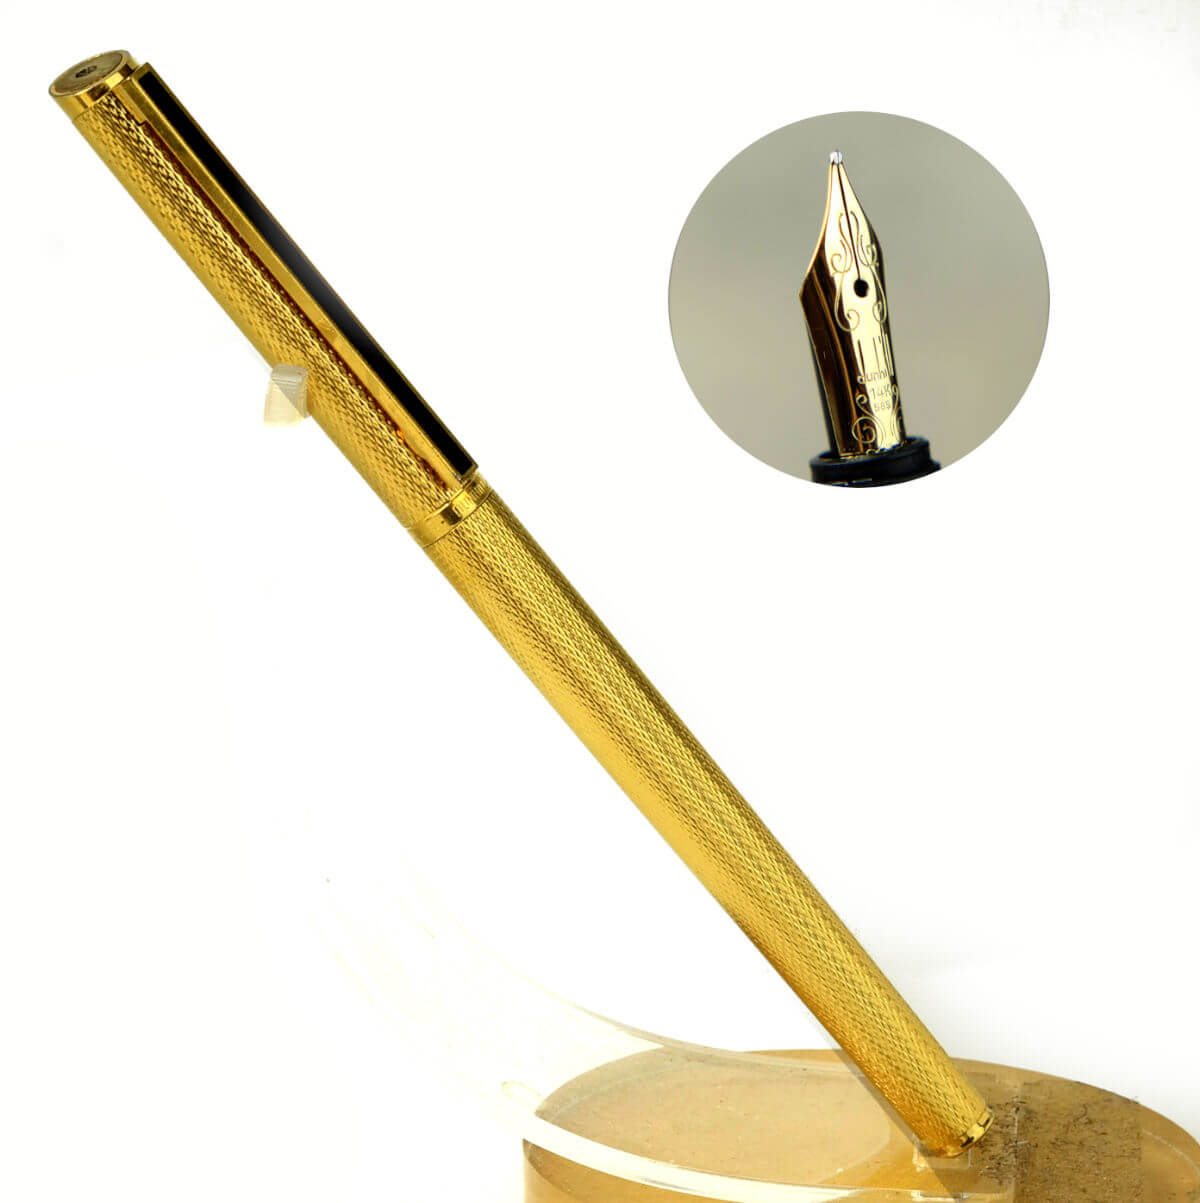 Dunhill Fountain Pen Not Flowing: Unlock Pen's Potential